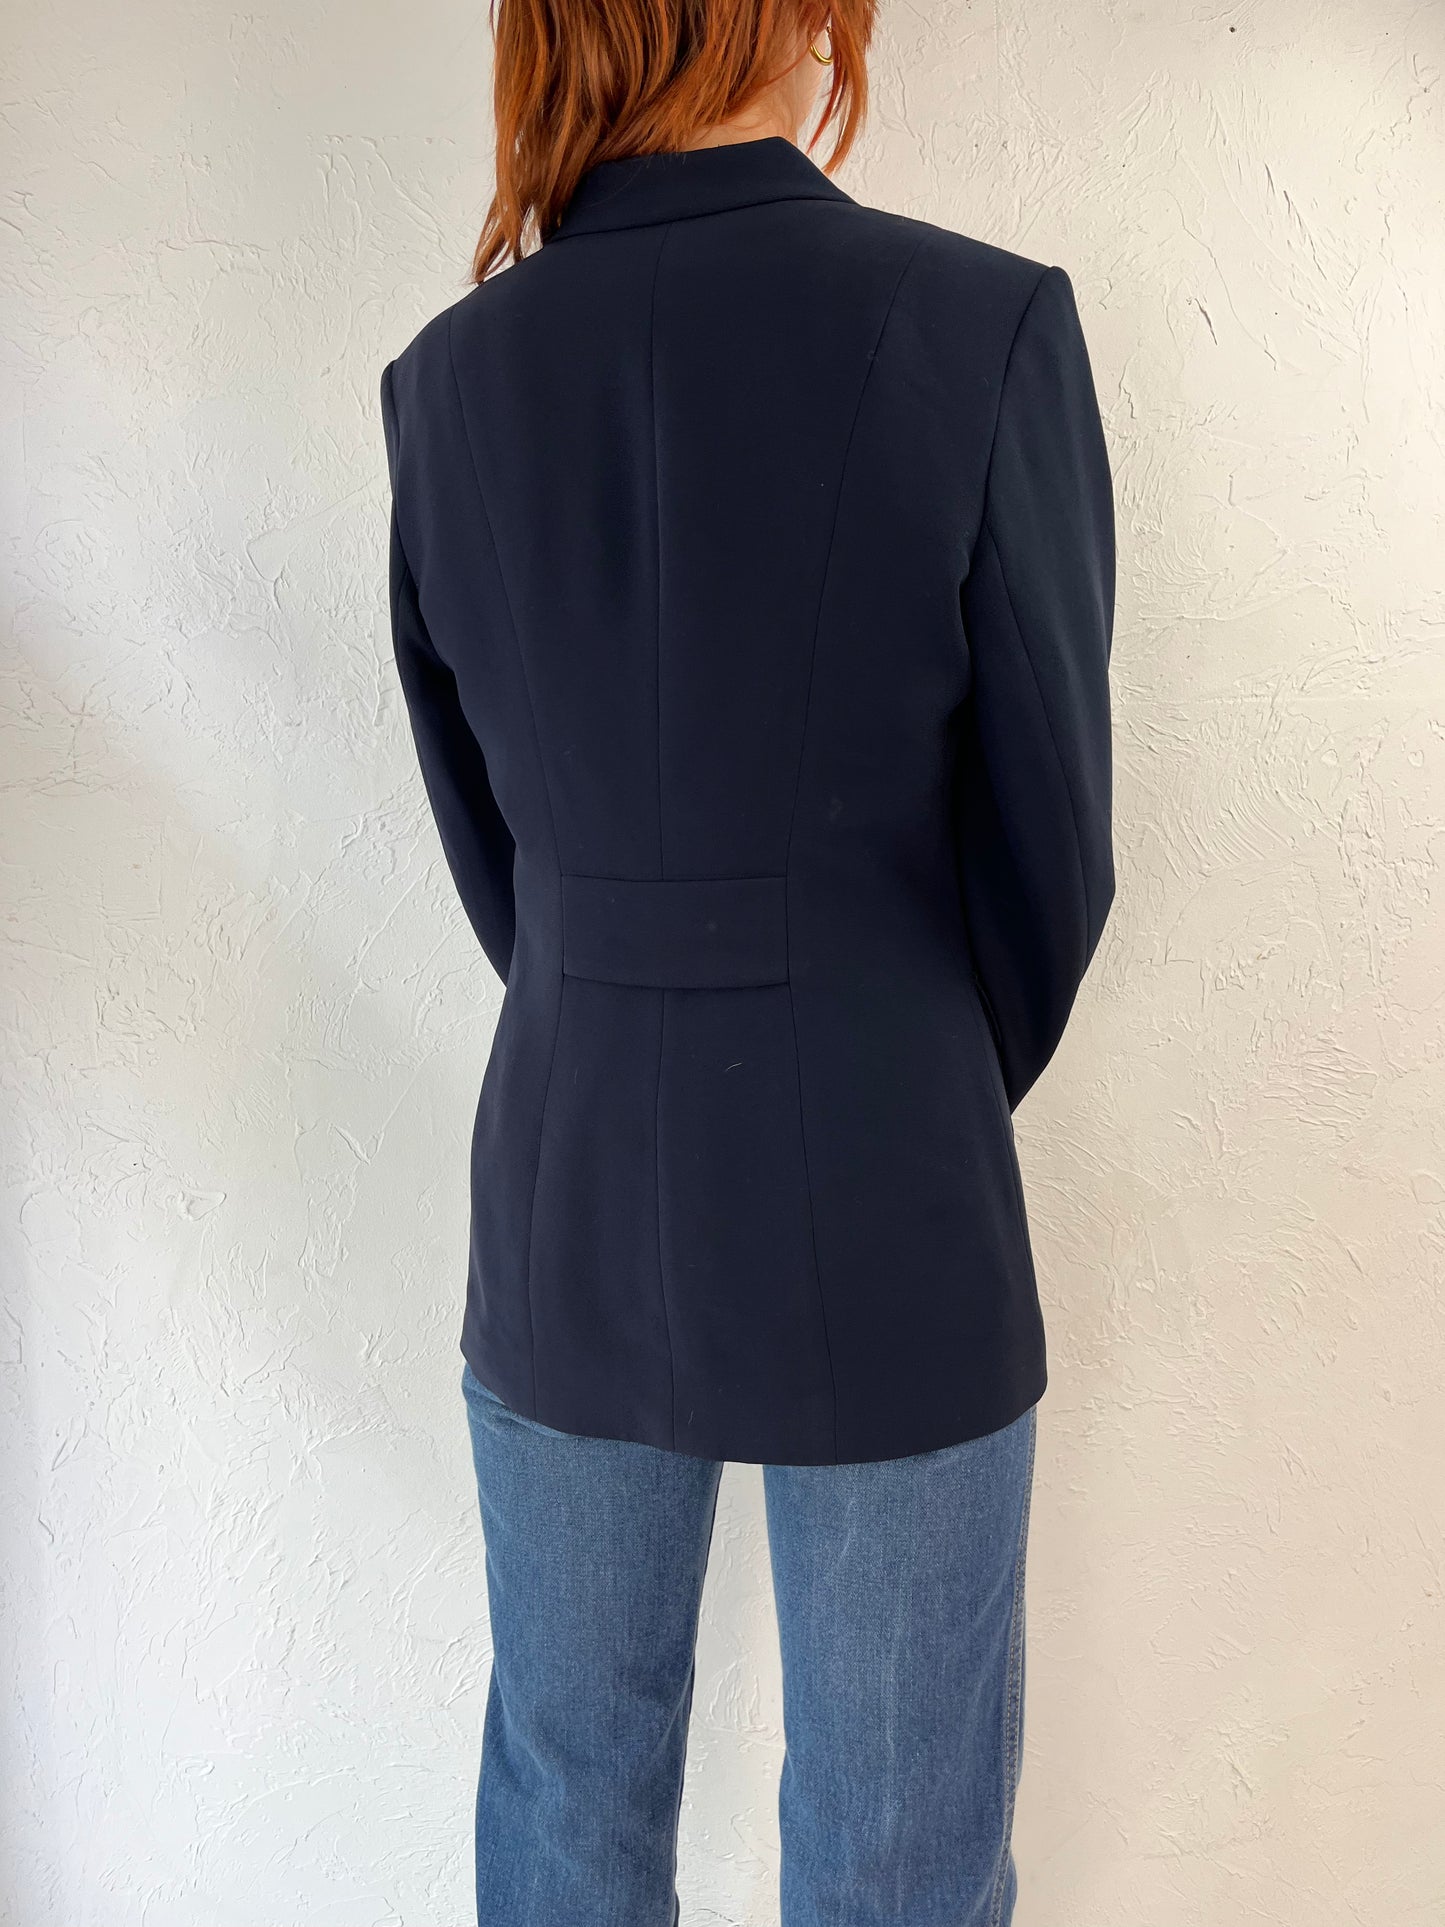 90s 'A Wear’ Navy Blue Dress Jacket / Small